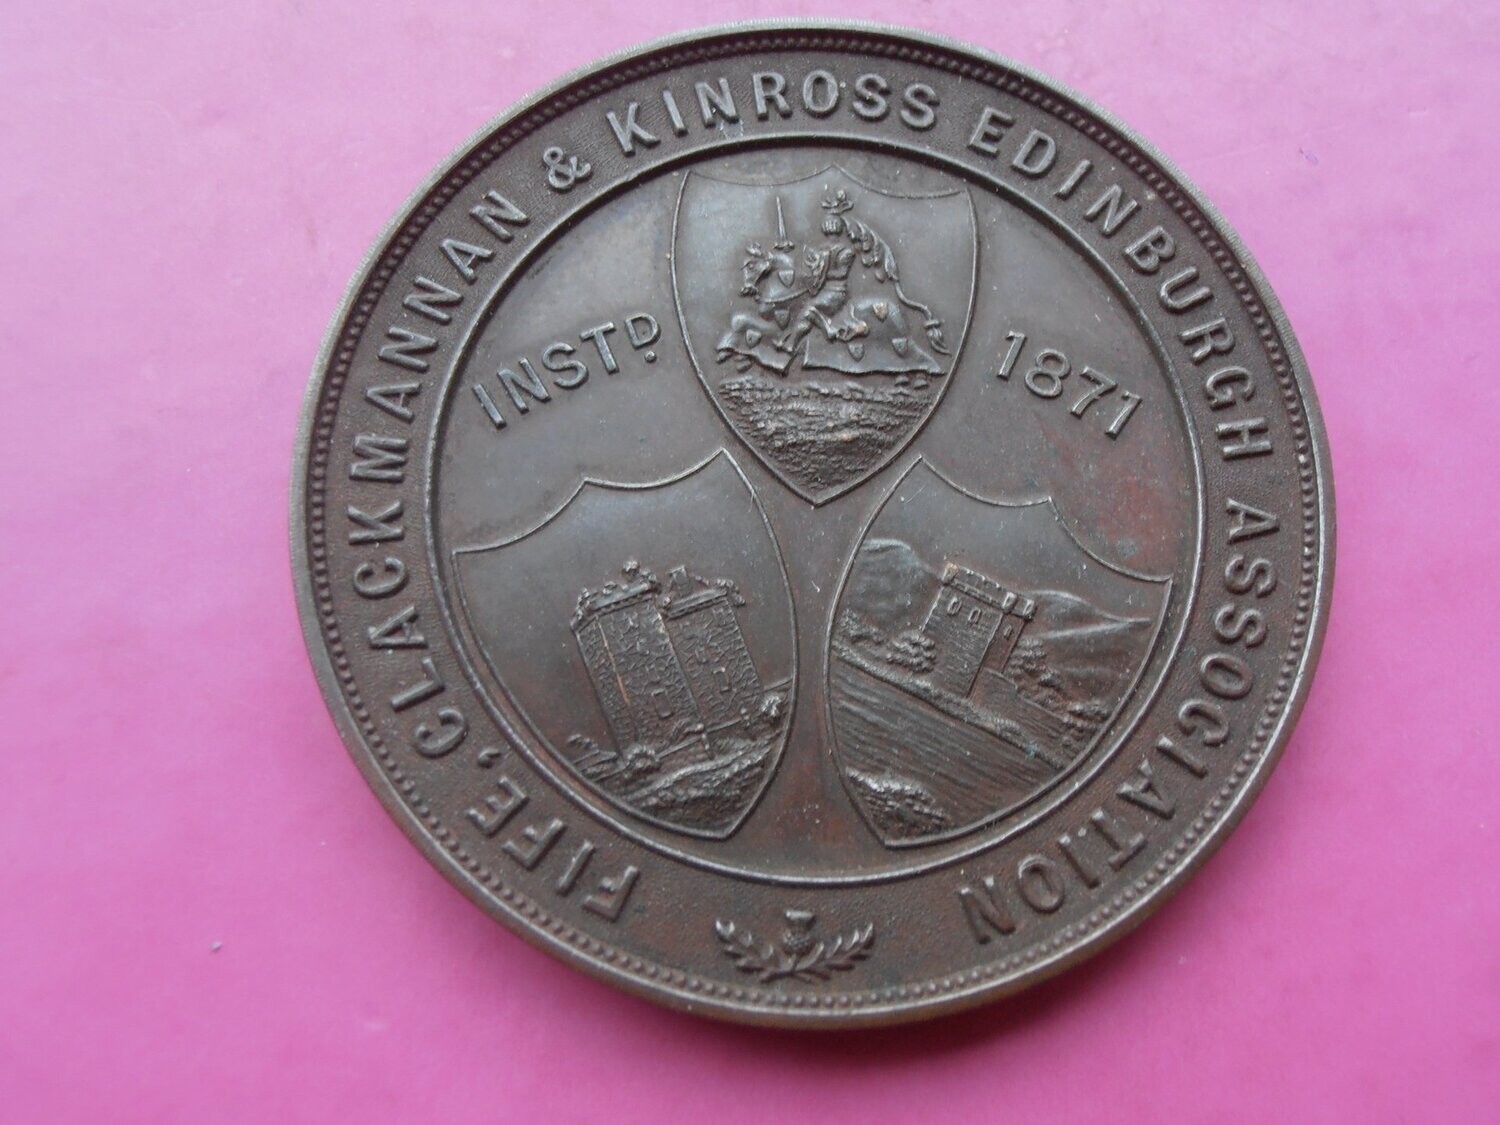 Fife Clackmannan & Kinross Edinburgh Association Medal - 1905